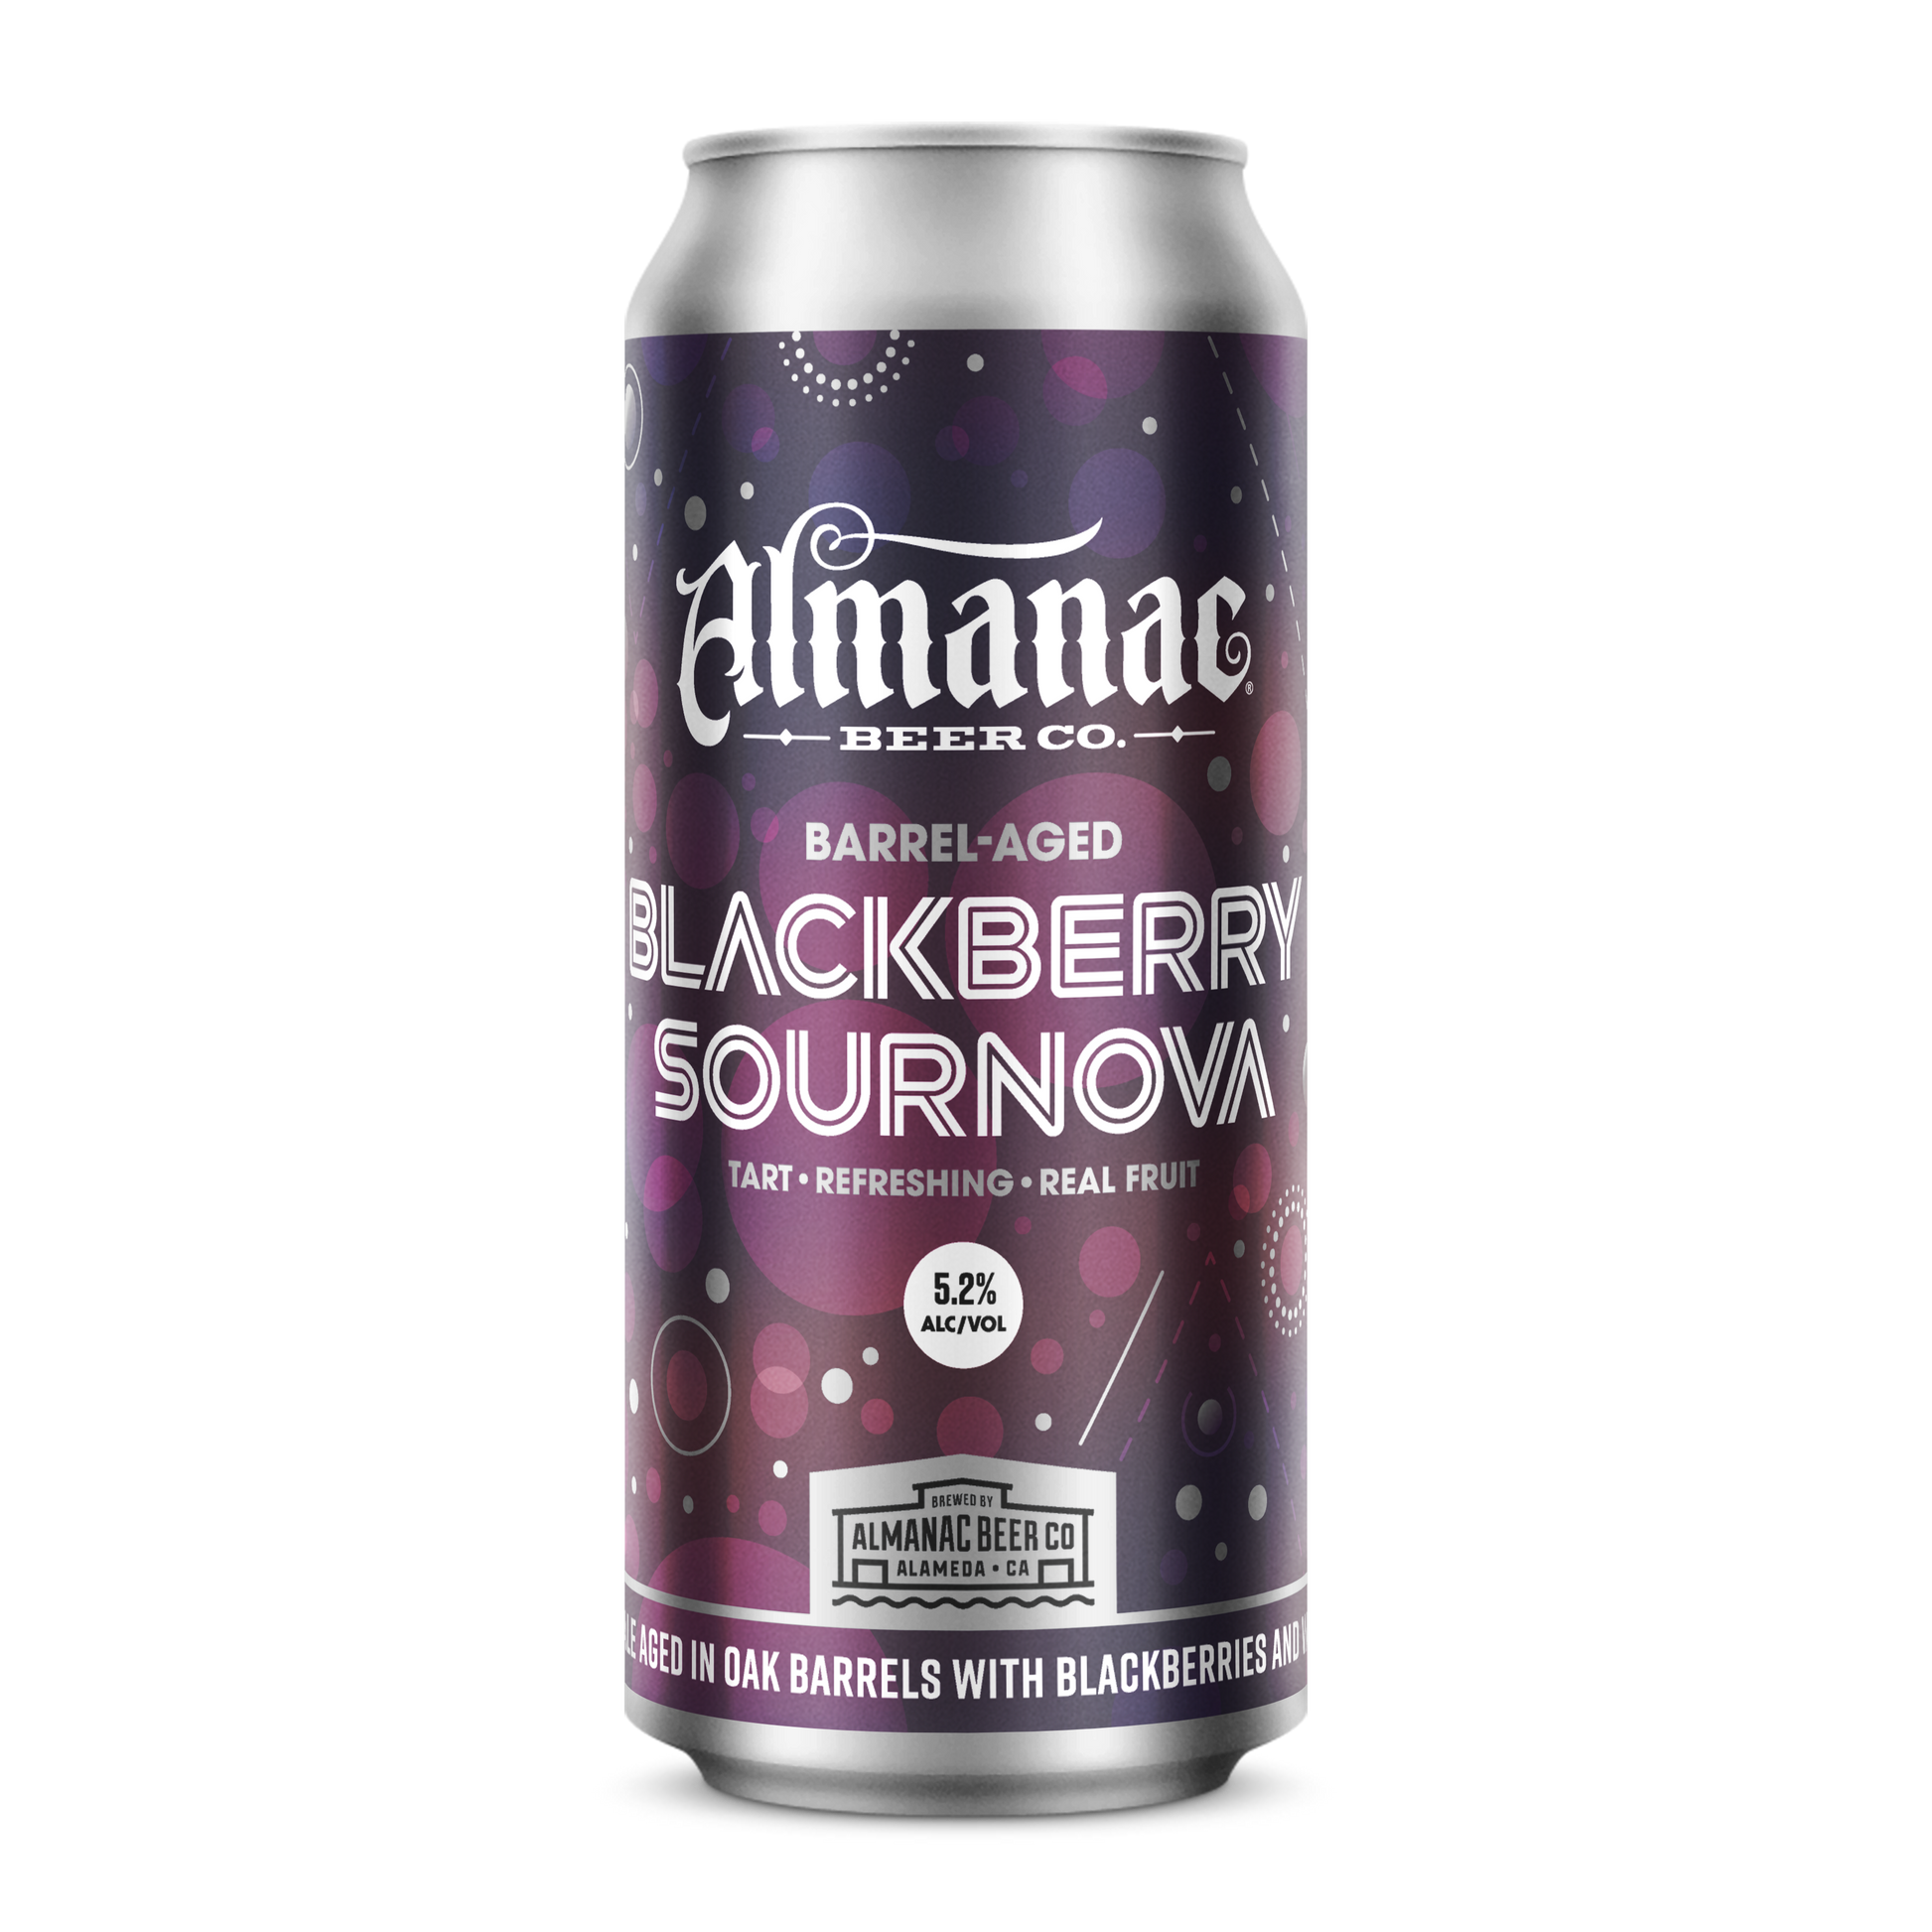 Almanac Barrel-Aged Blackberry Sournova / バレルエイジド ブラックベリー サワーノヴァ